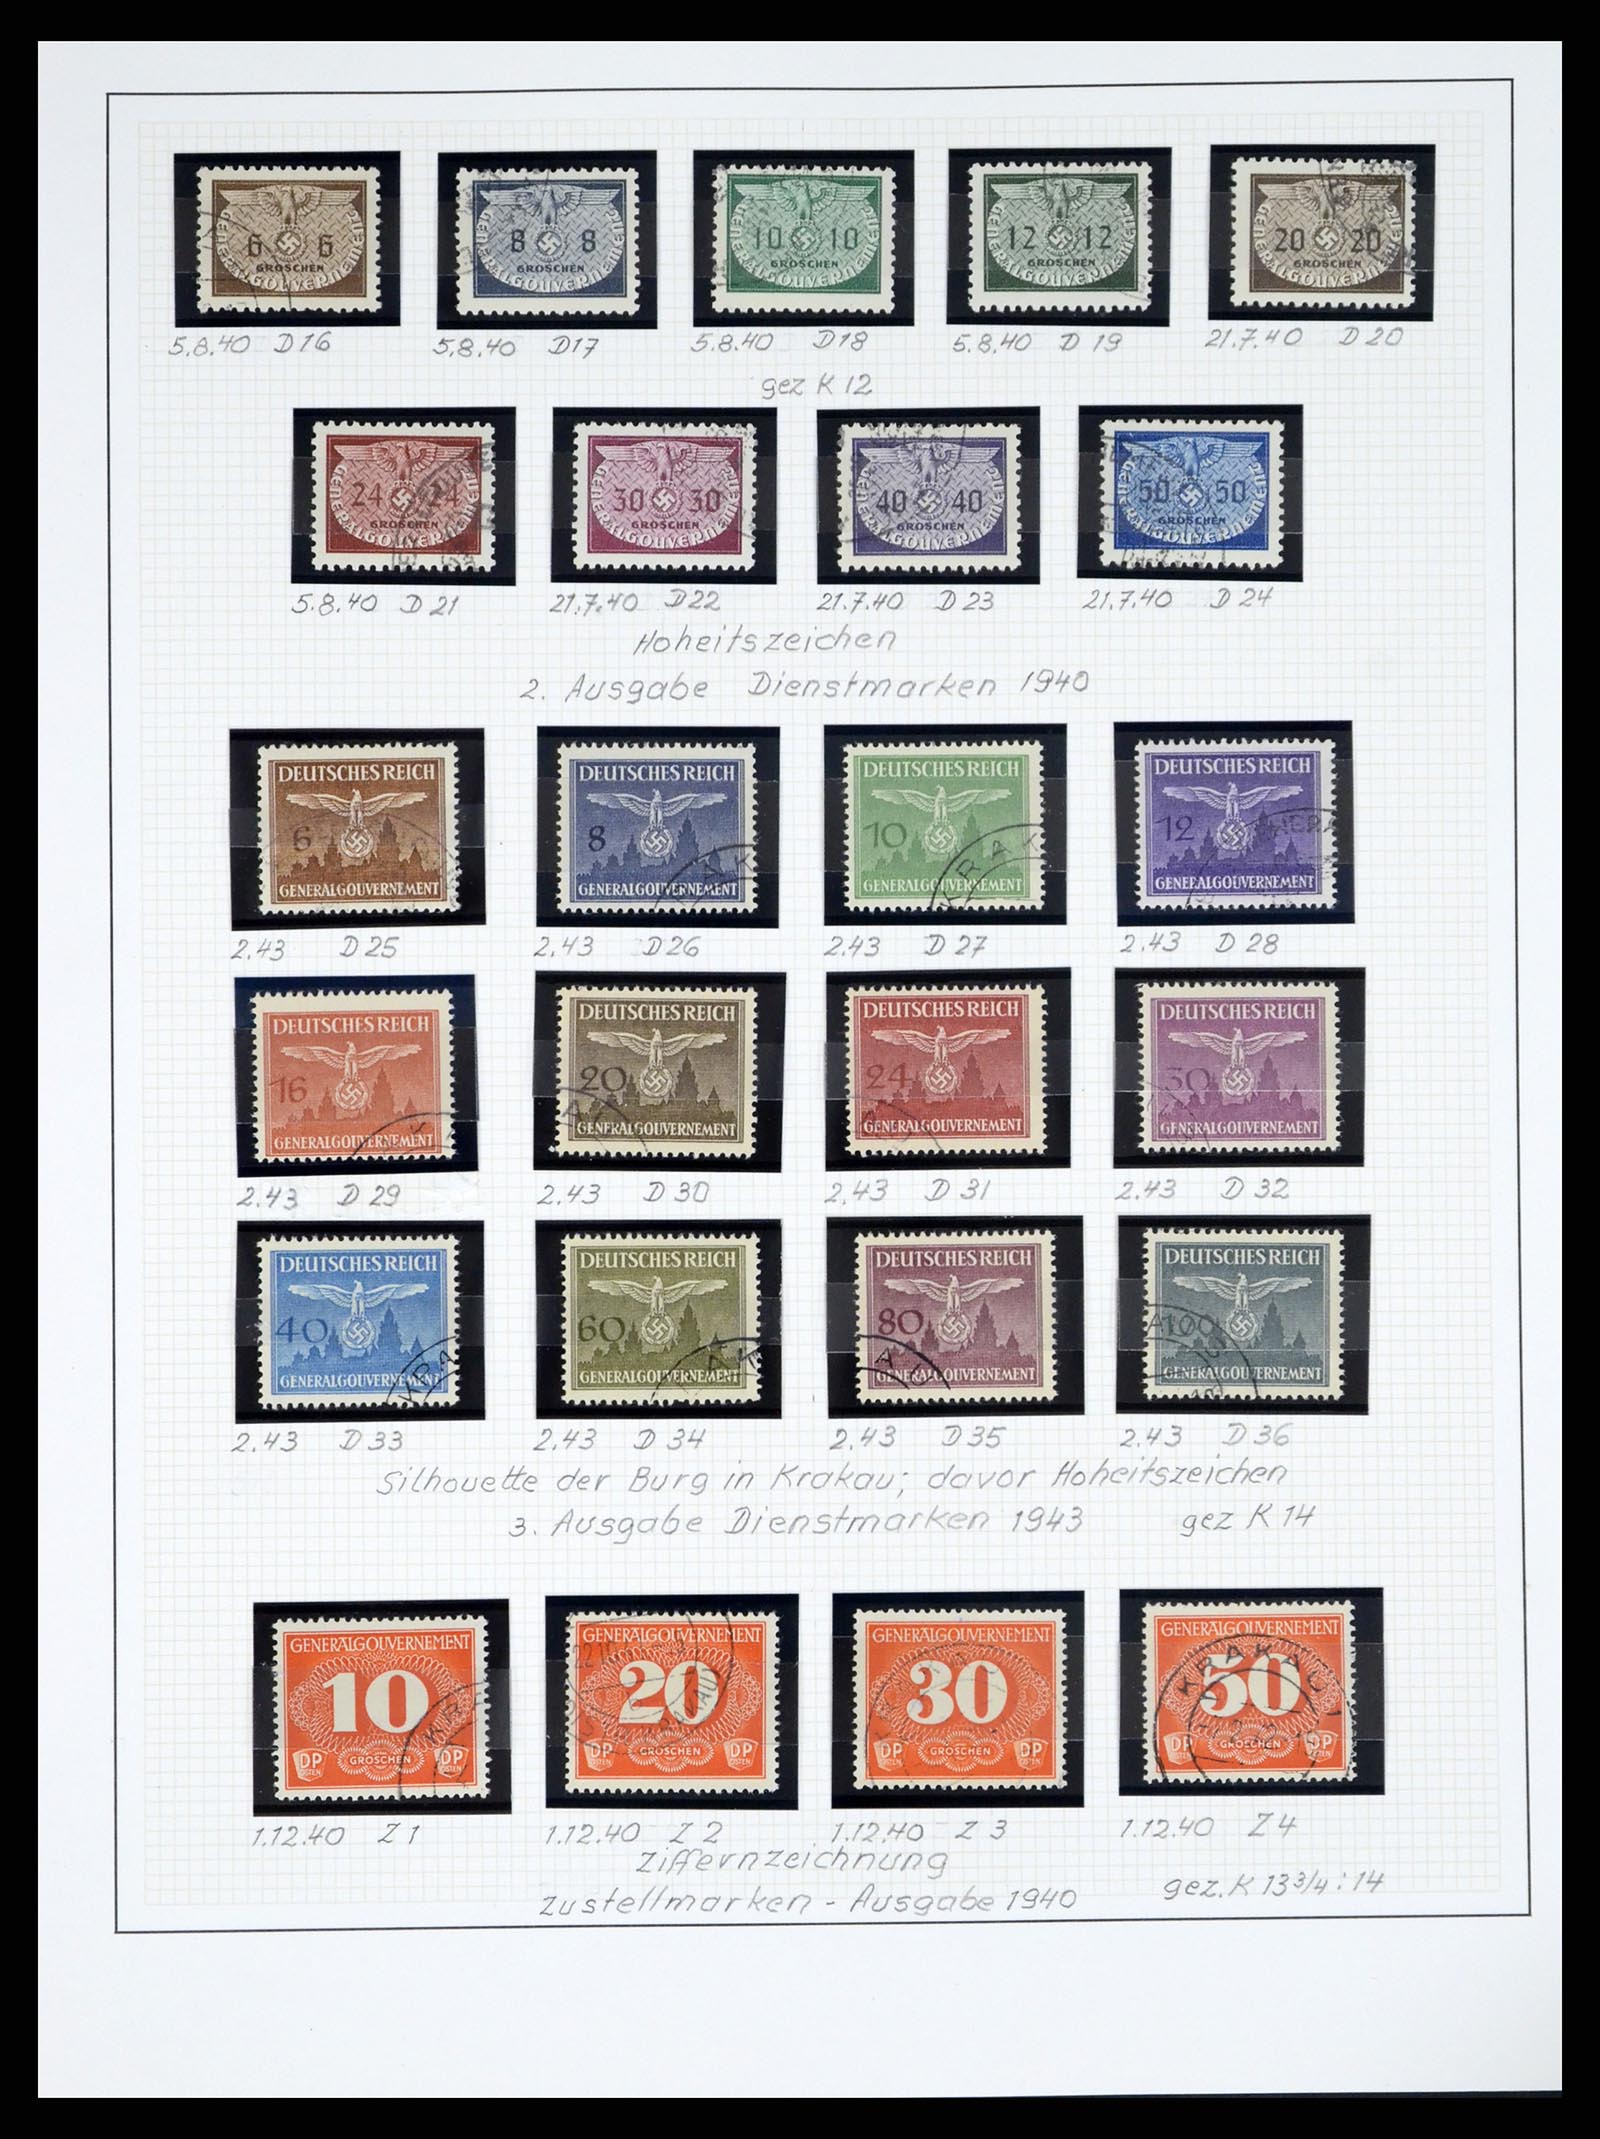 37535 177 - Stamp collection 37535 German occupation second worldwar 1939-1945.